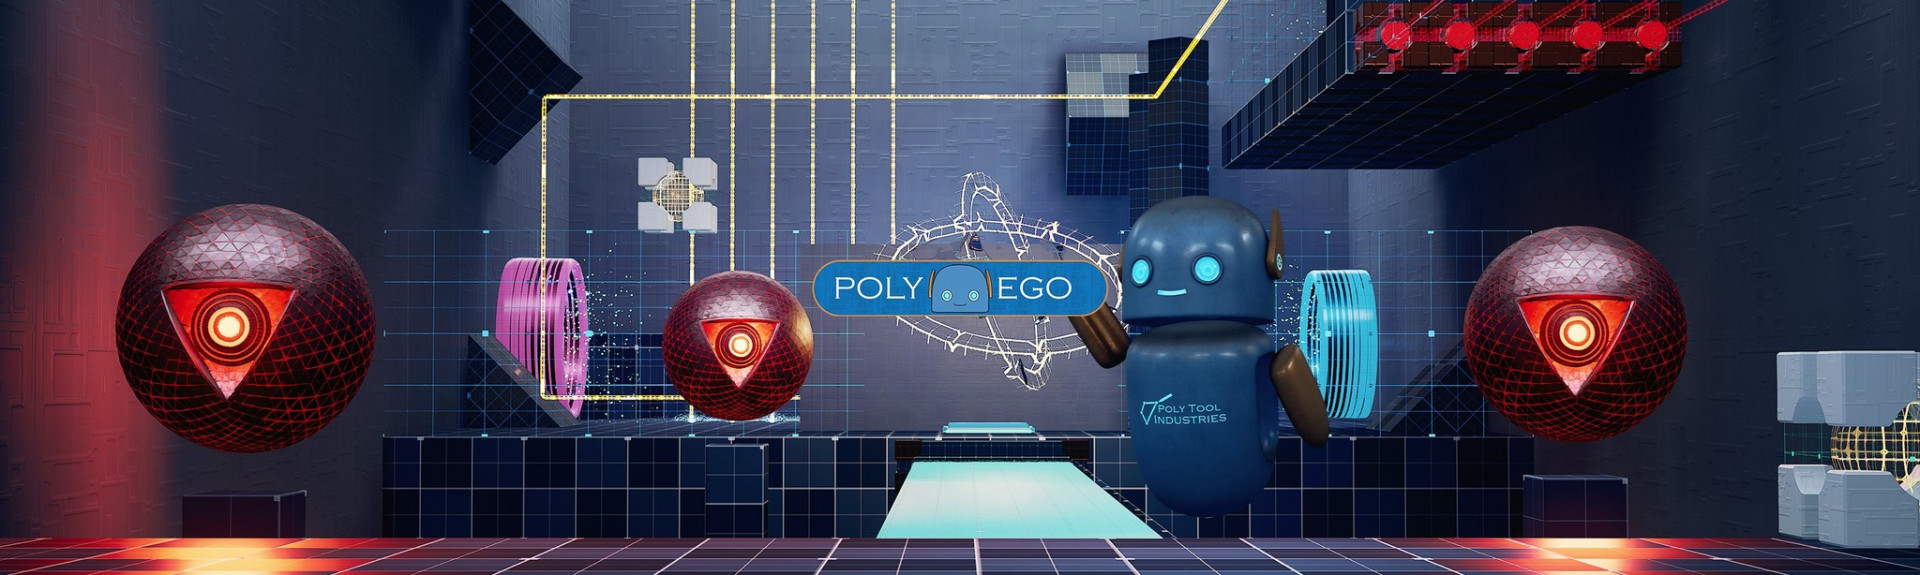 Poly Ego